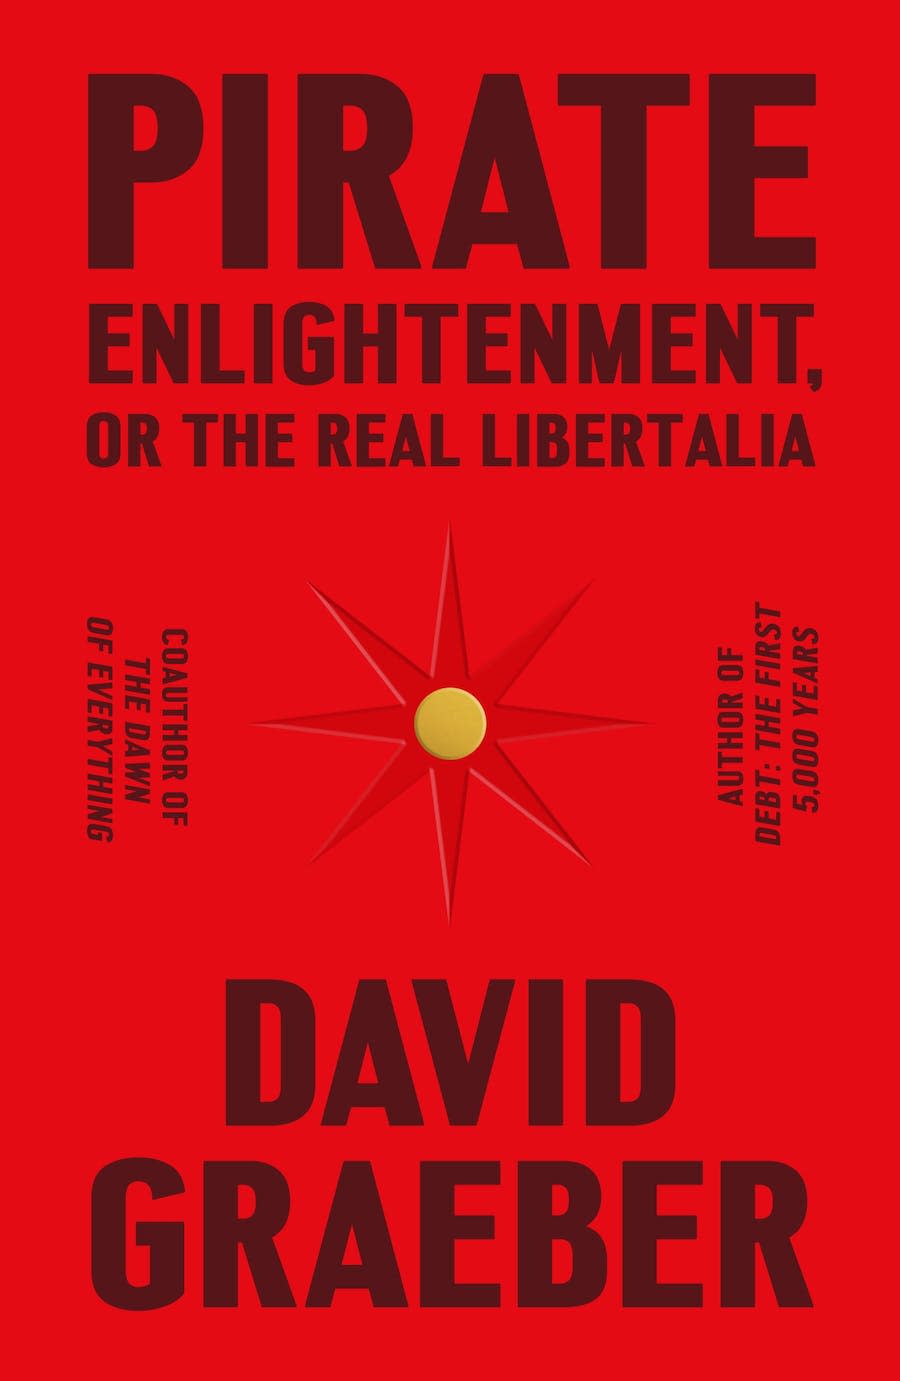 "Pirate Enlightenment, or the Real Libertalia," by David Graeber.